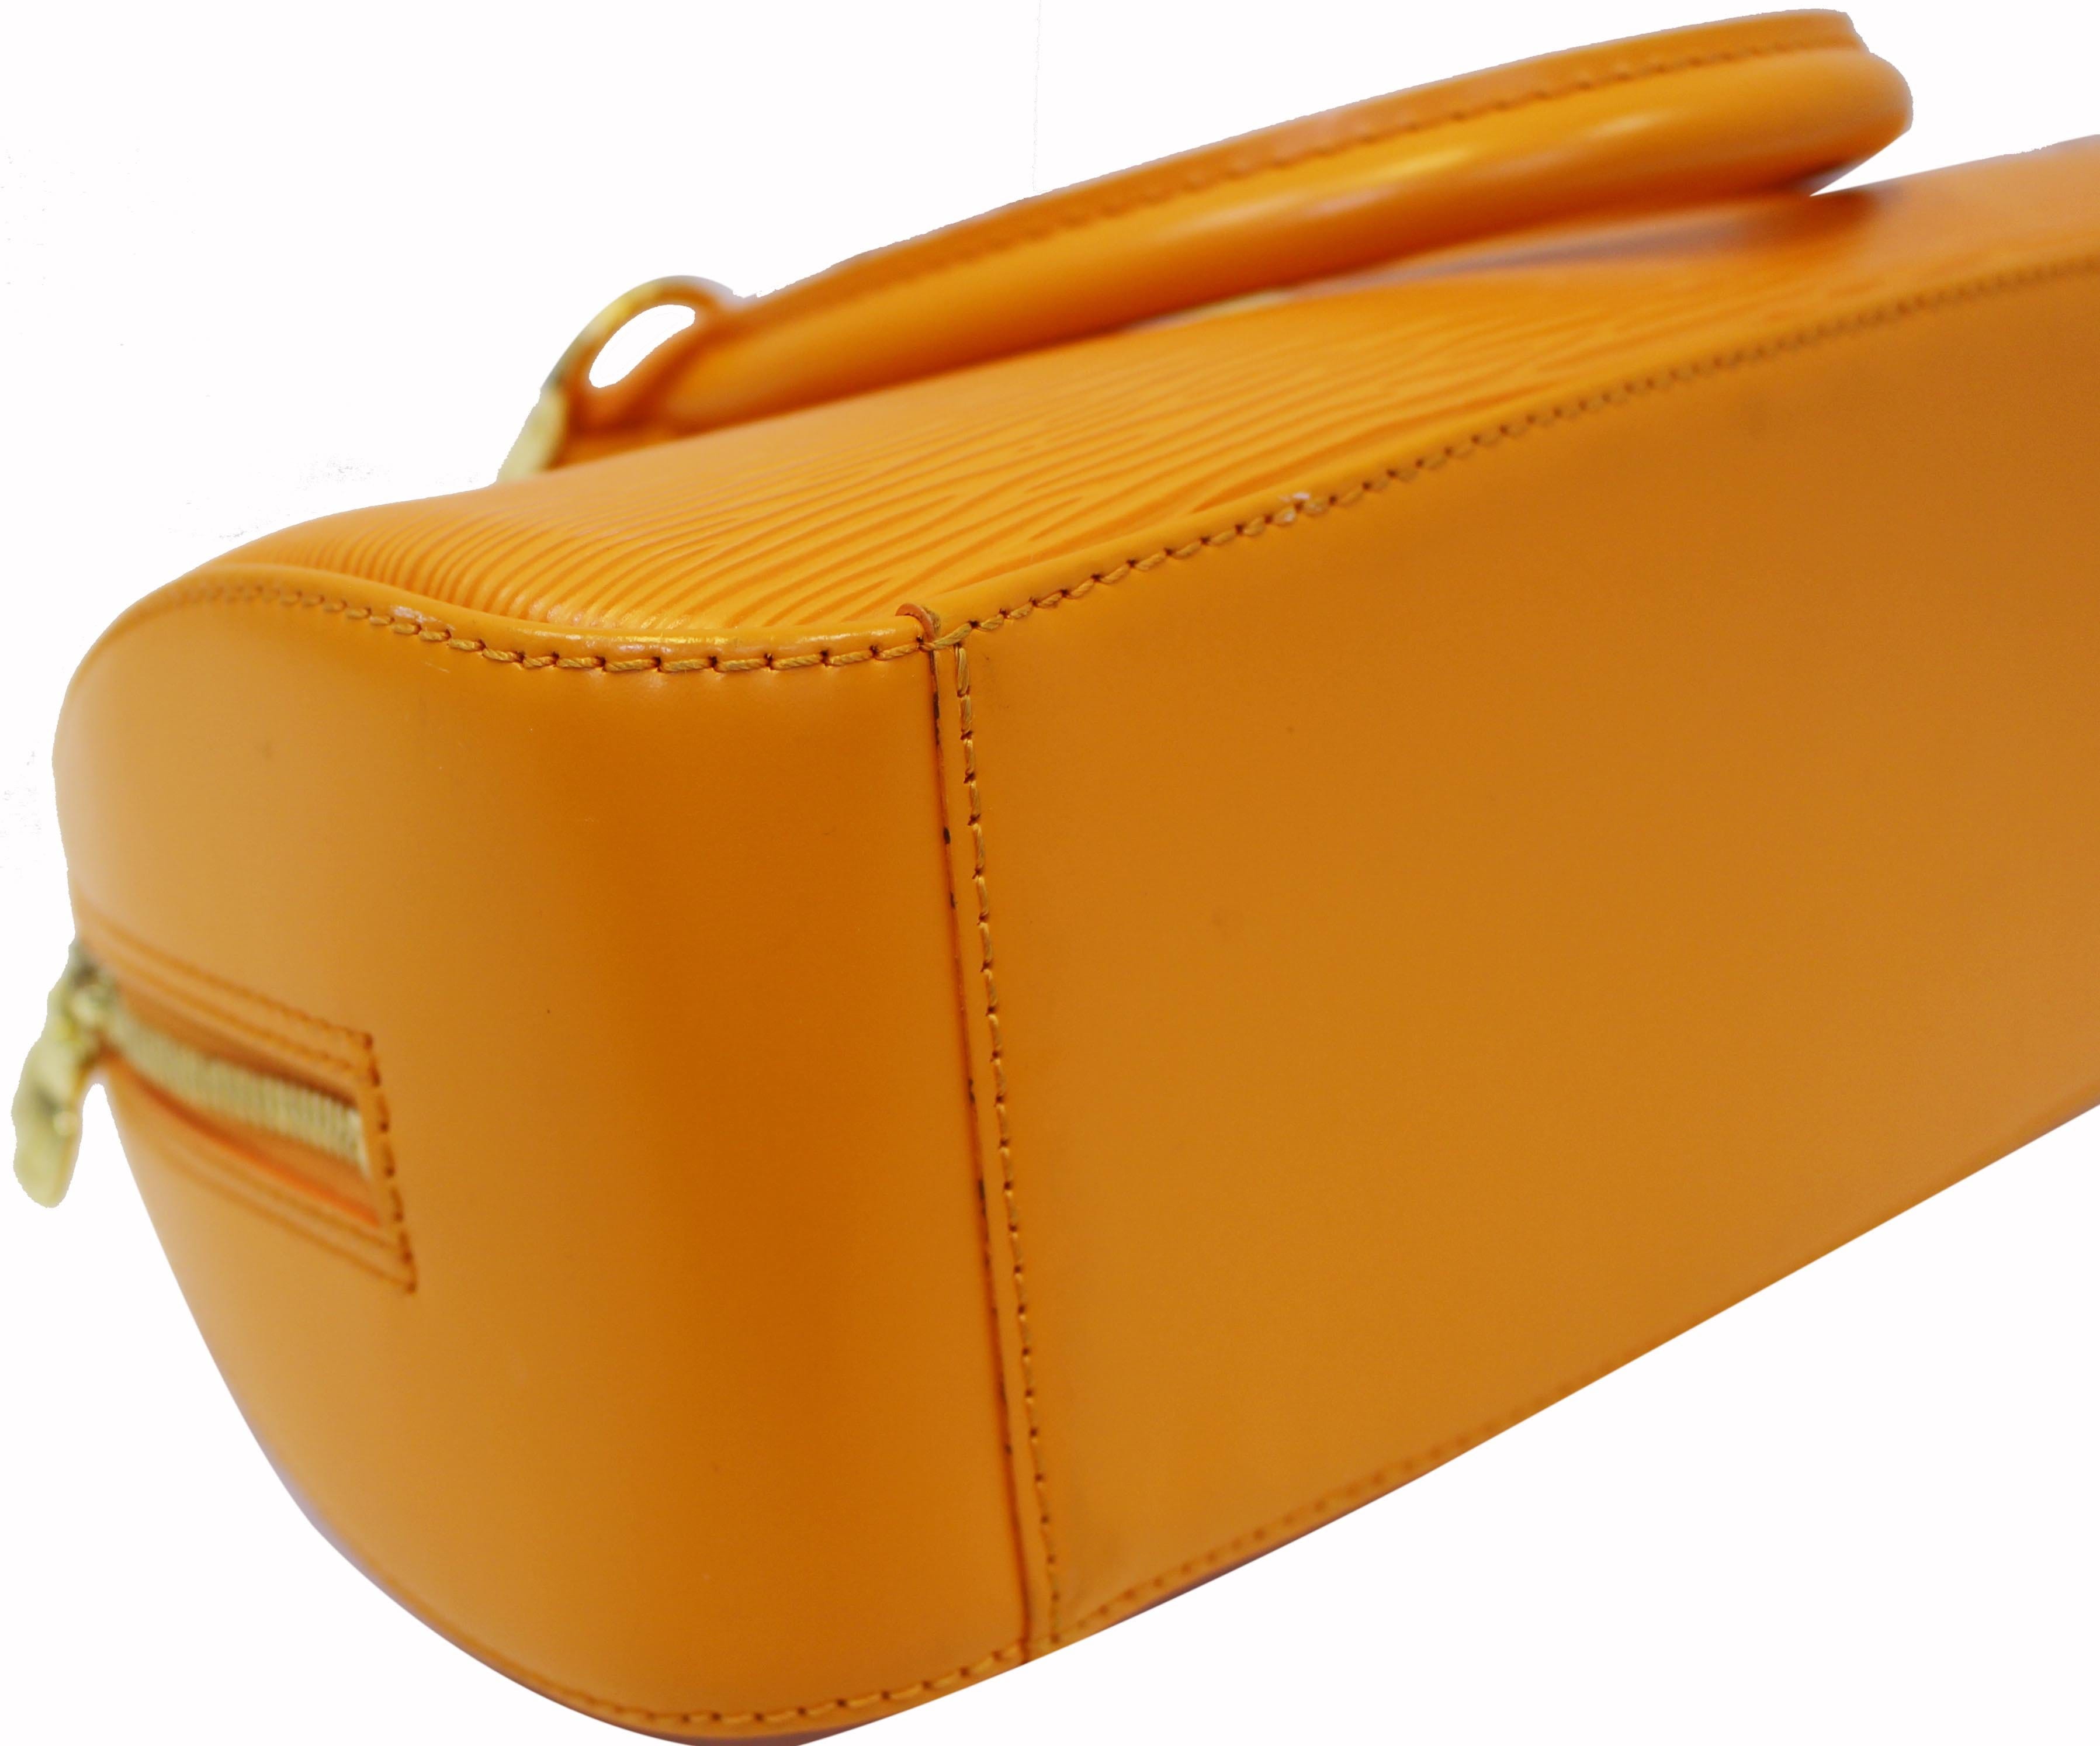 Louis Vuitton Jasmin Yellow Leather Handbag (Pre-Owned)